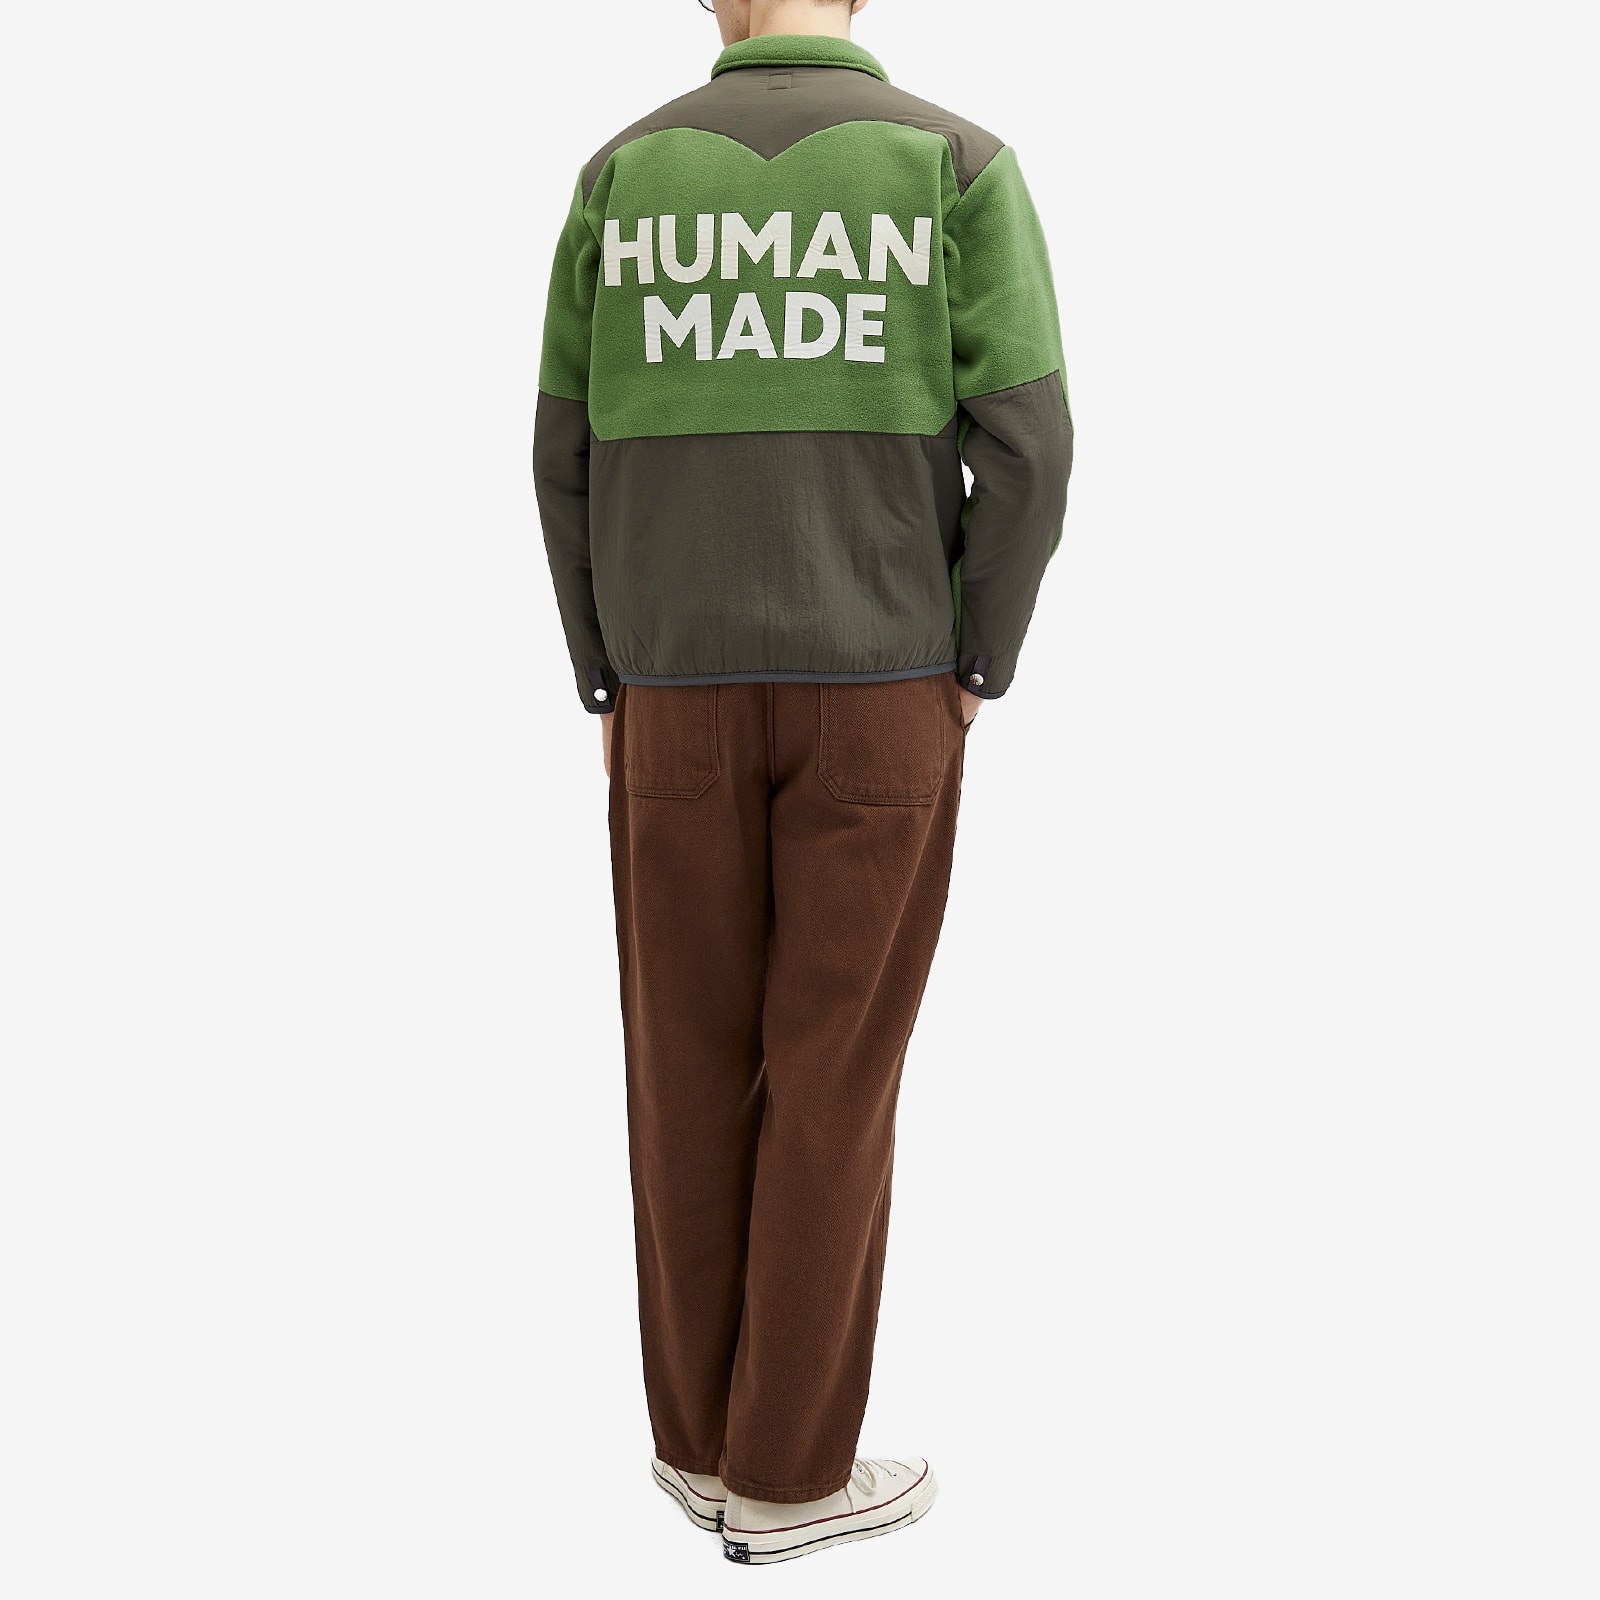 Human Made Fleece Jacket - 4